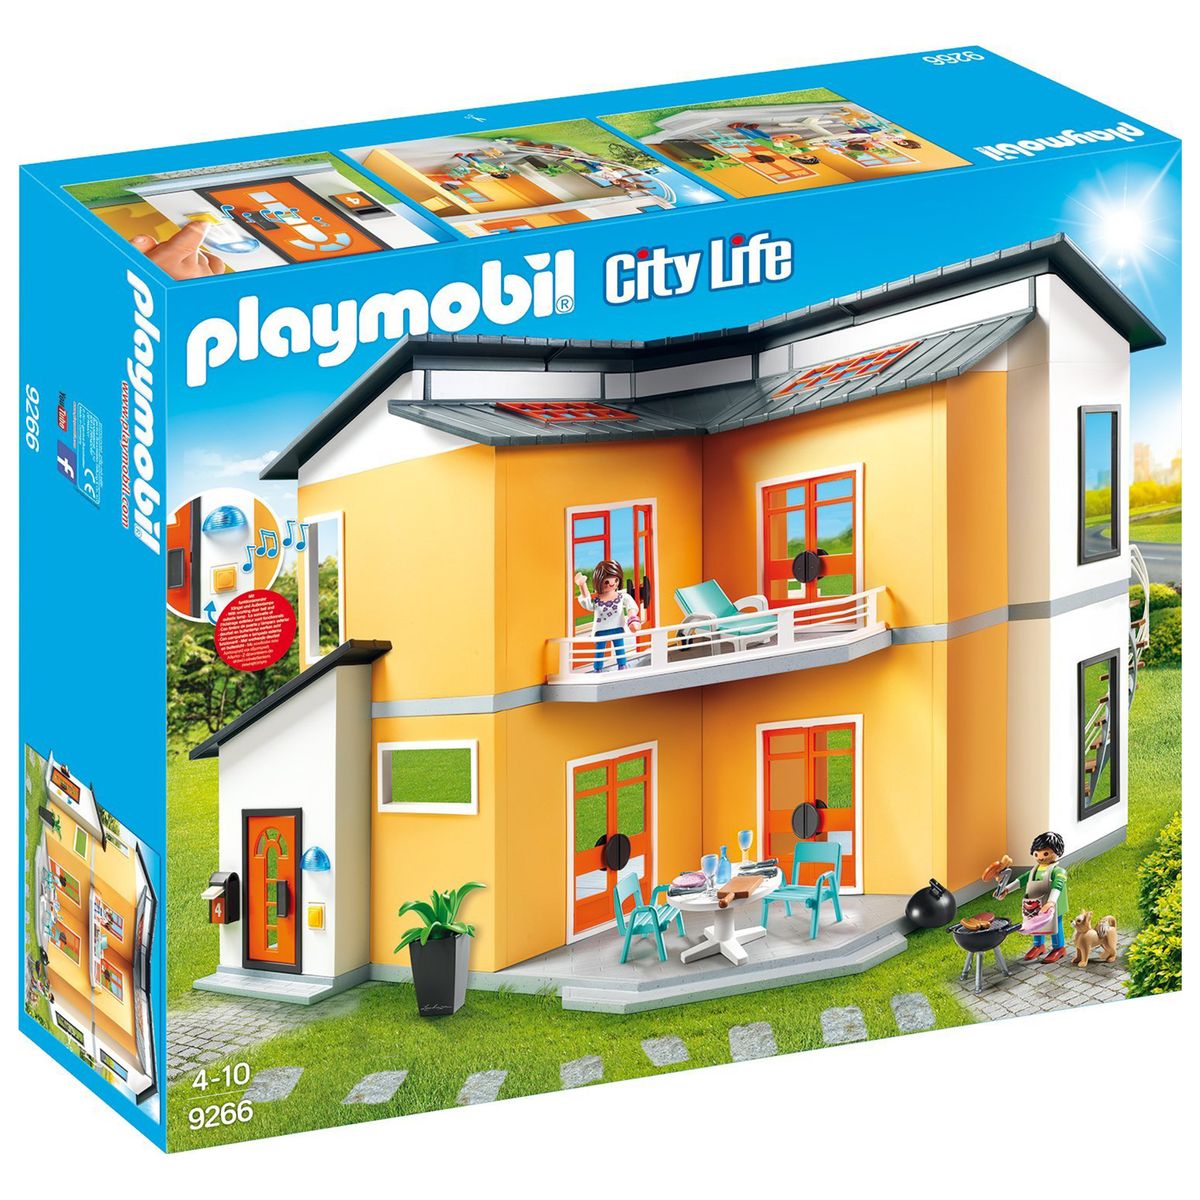 Citylife Playmobil 2x moderne Figuren zum Stadtleben